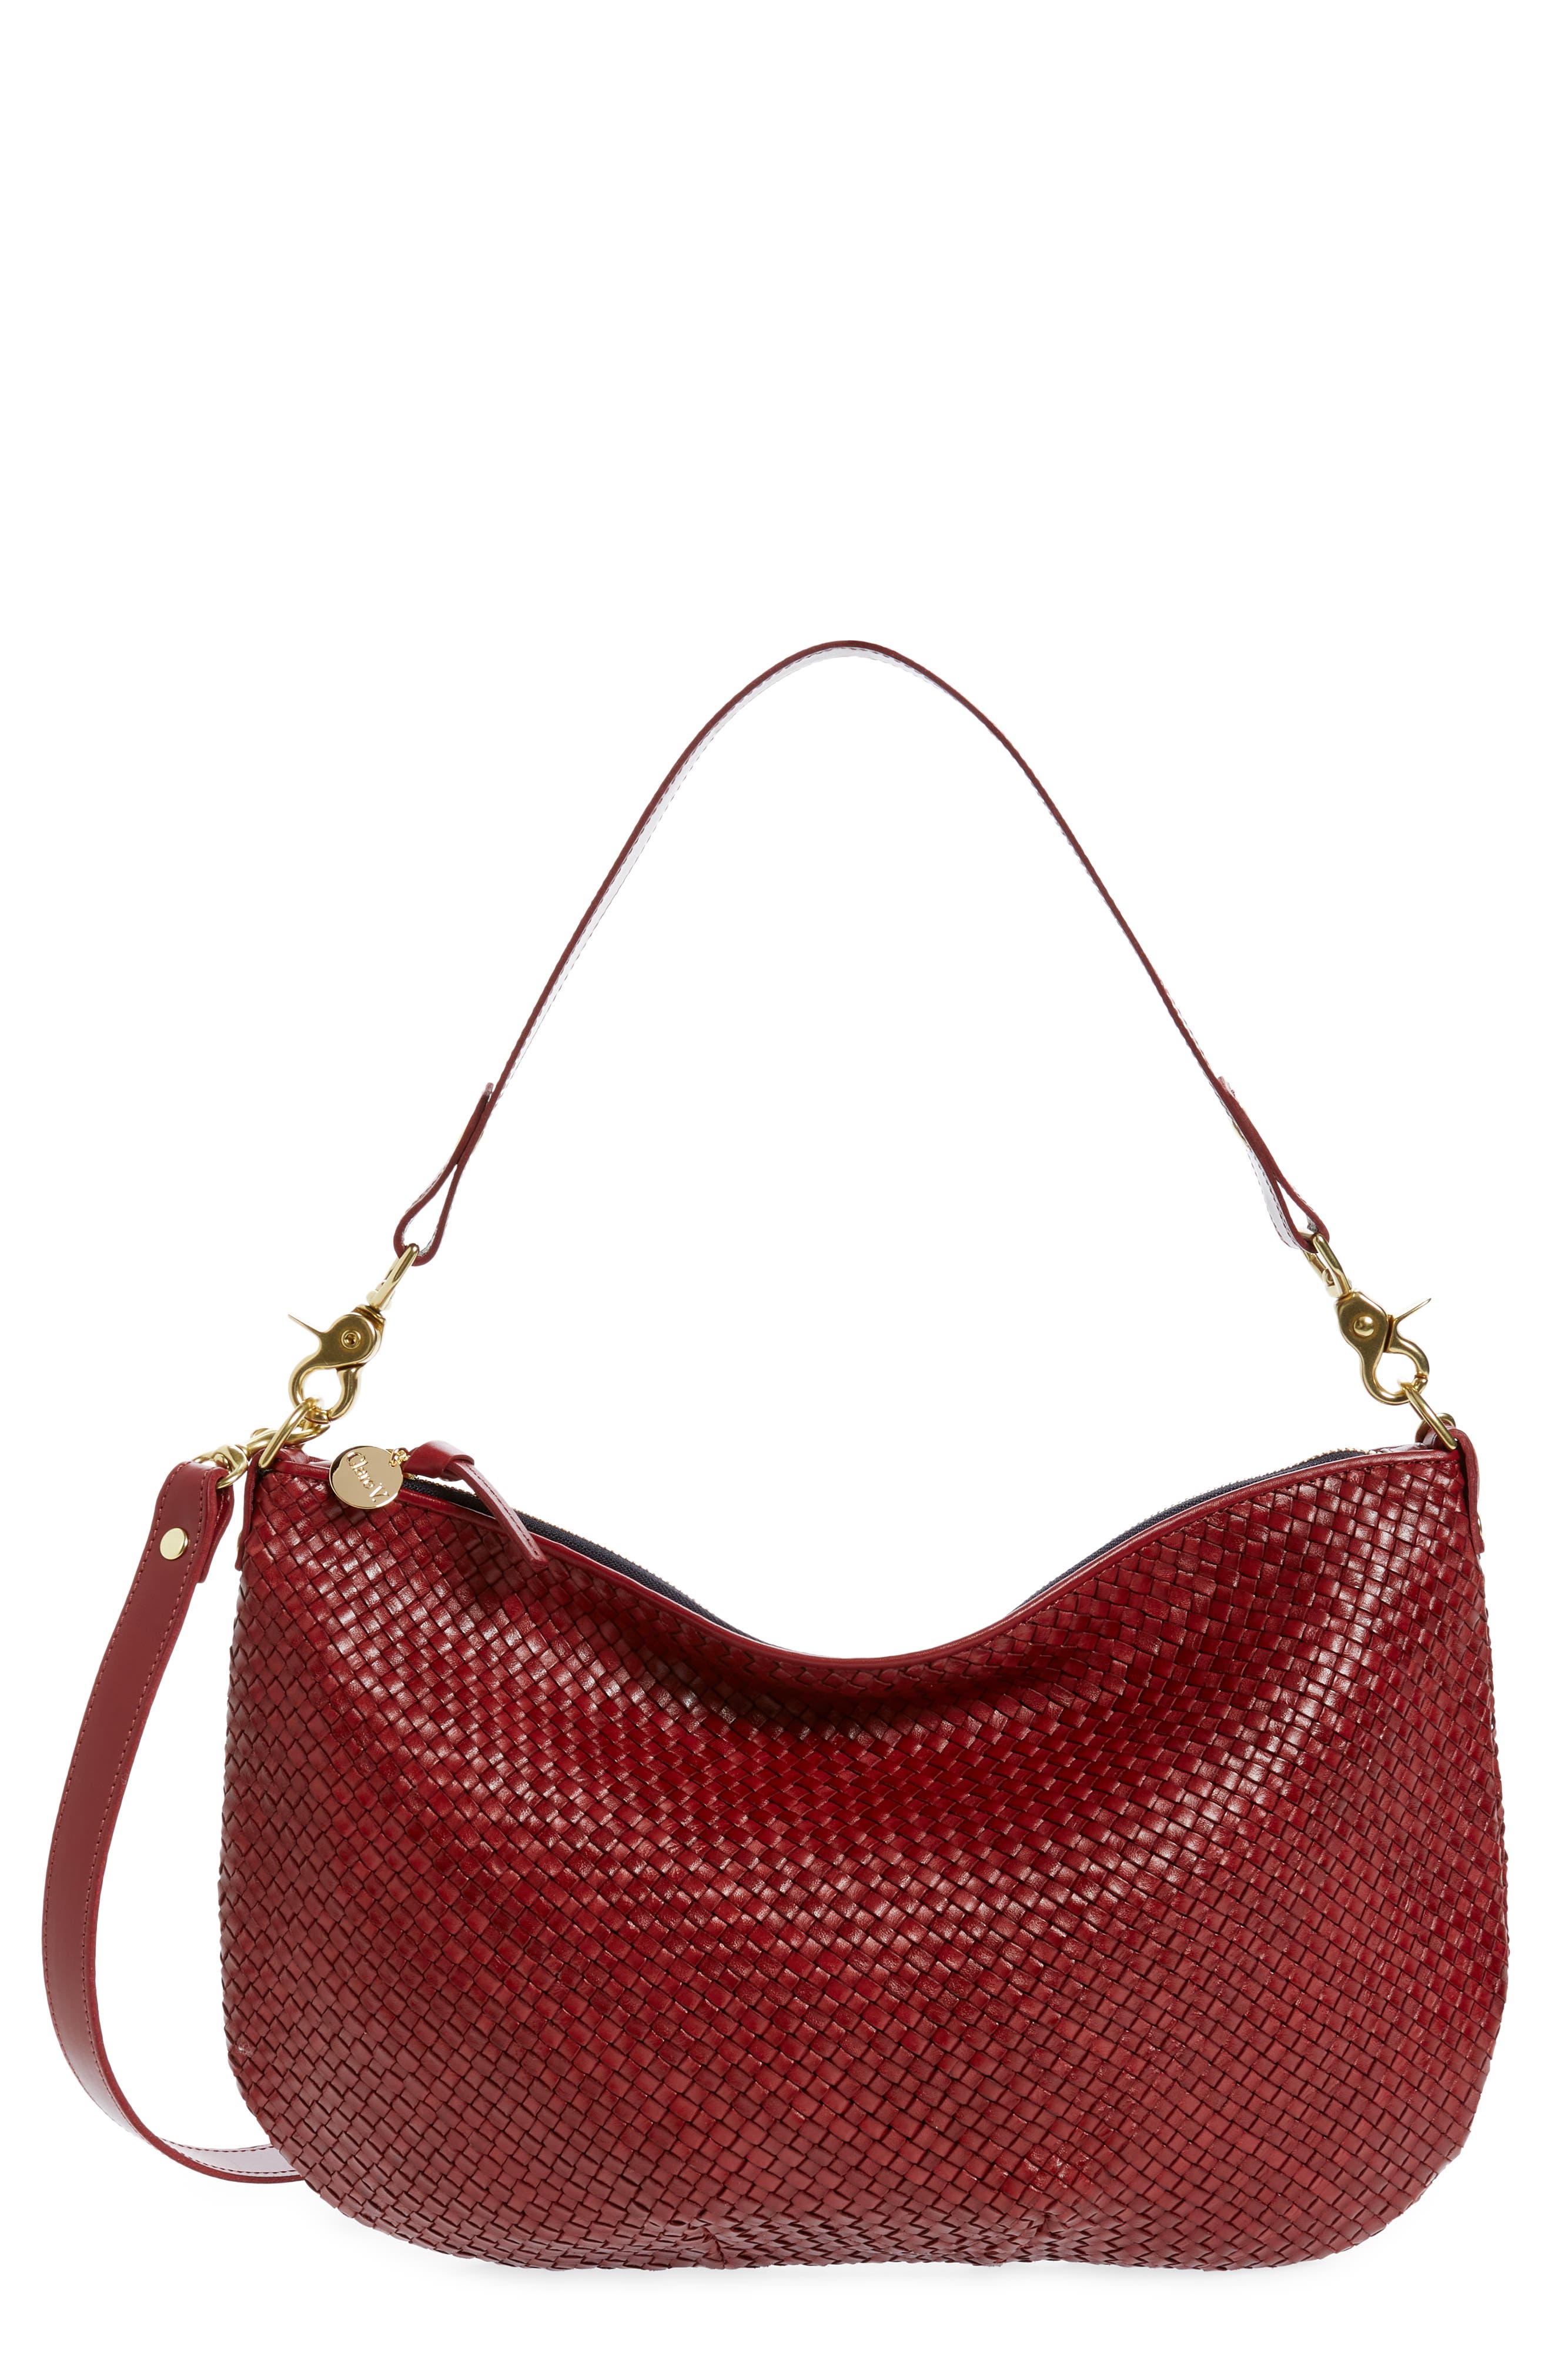 Clare V. Bando Leather Shoulder Bag in Natural Woven Checker